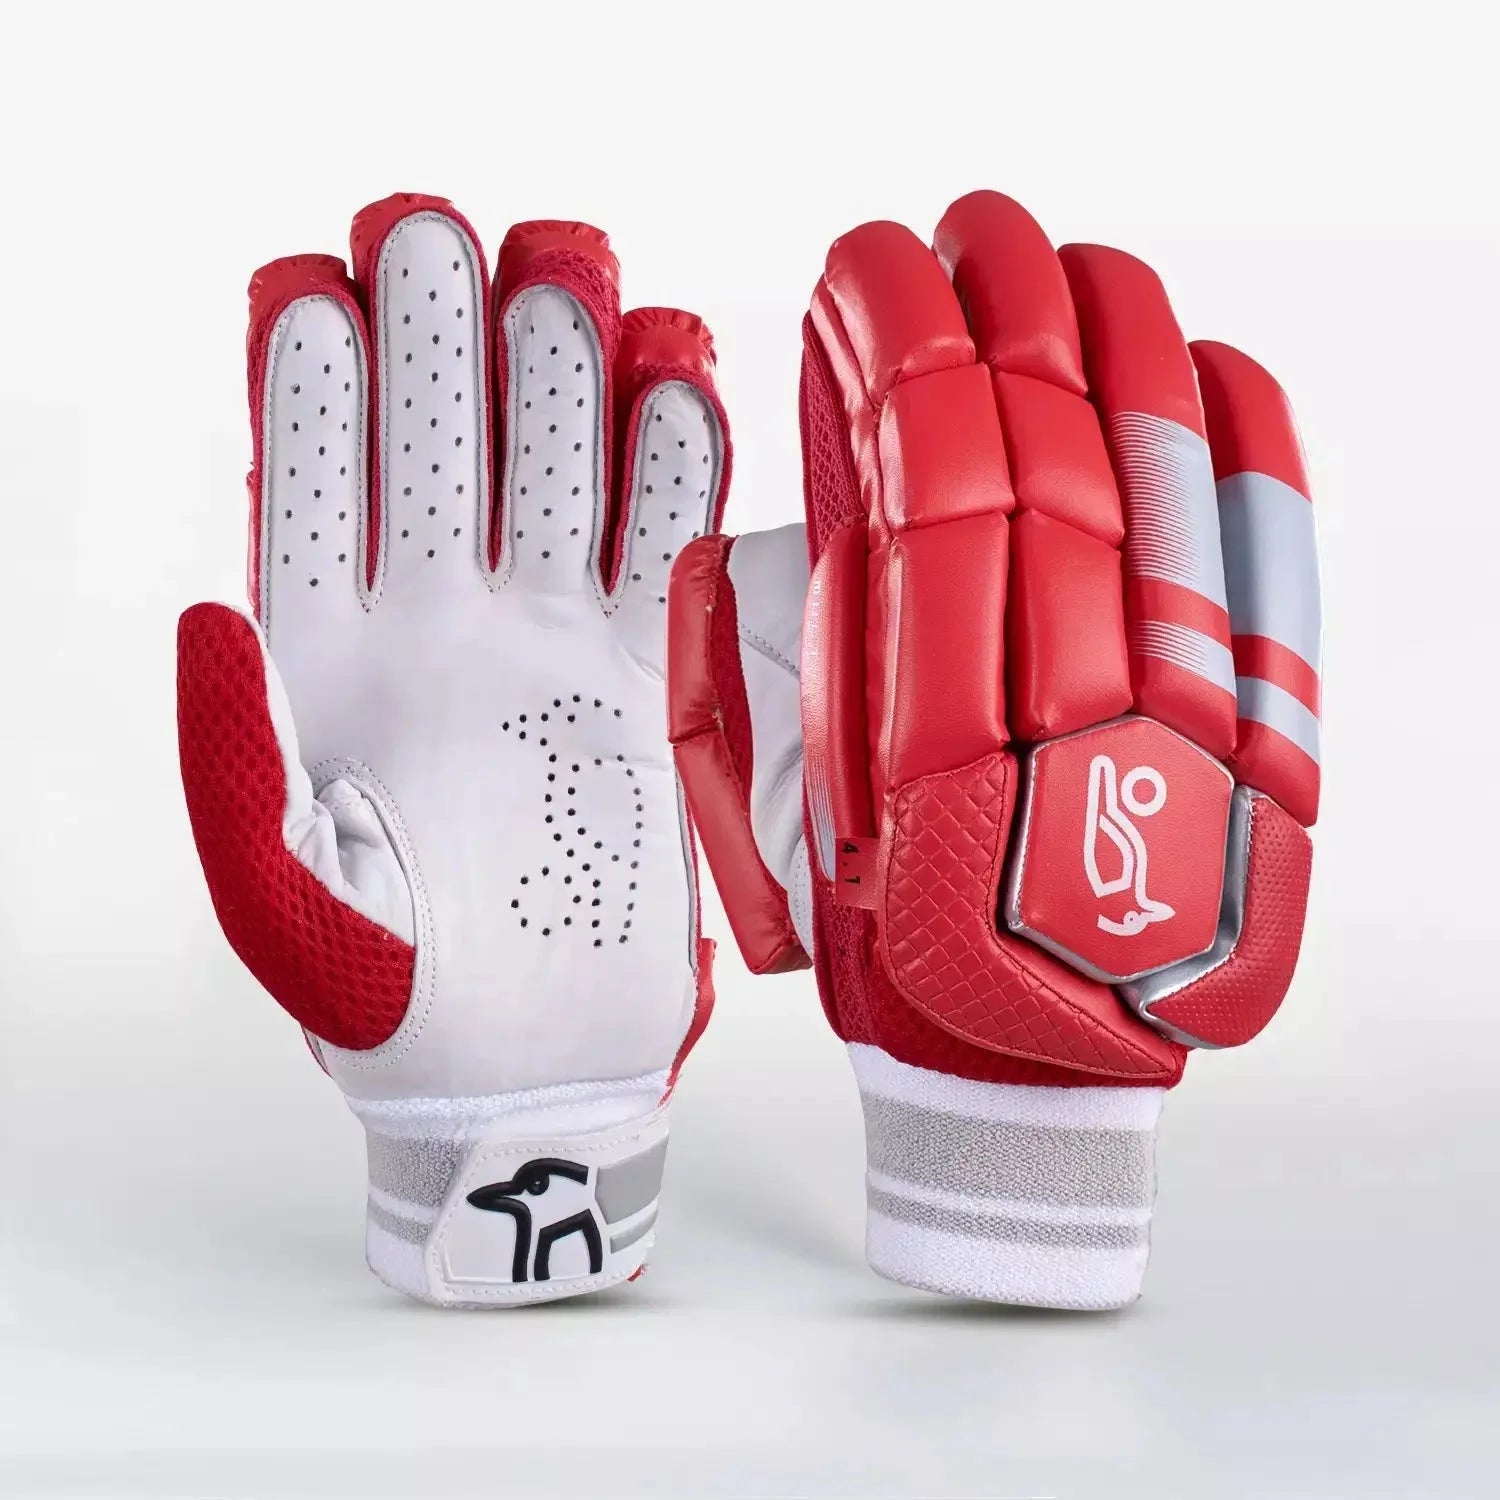 Kookaburra 4.1 T20 Red Cricket Batting Gloves - Adult RH - GLOVE - BATTING